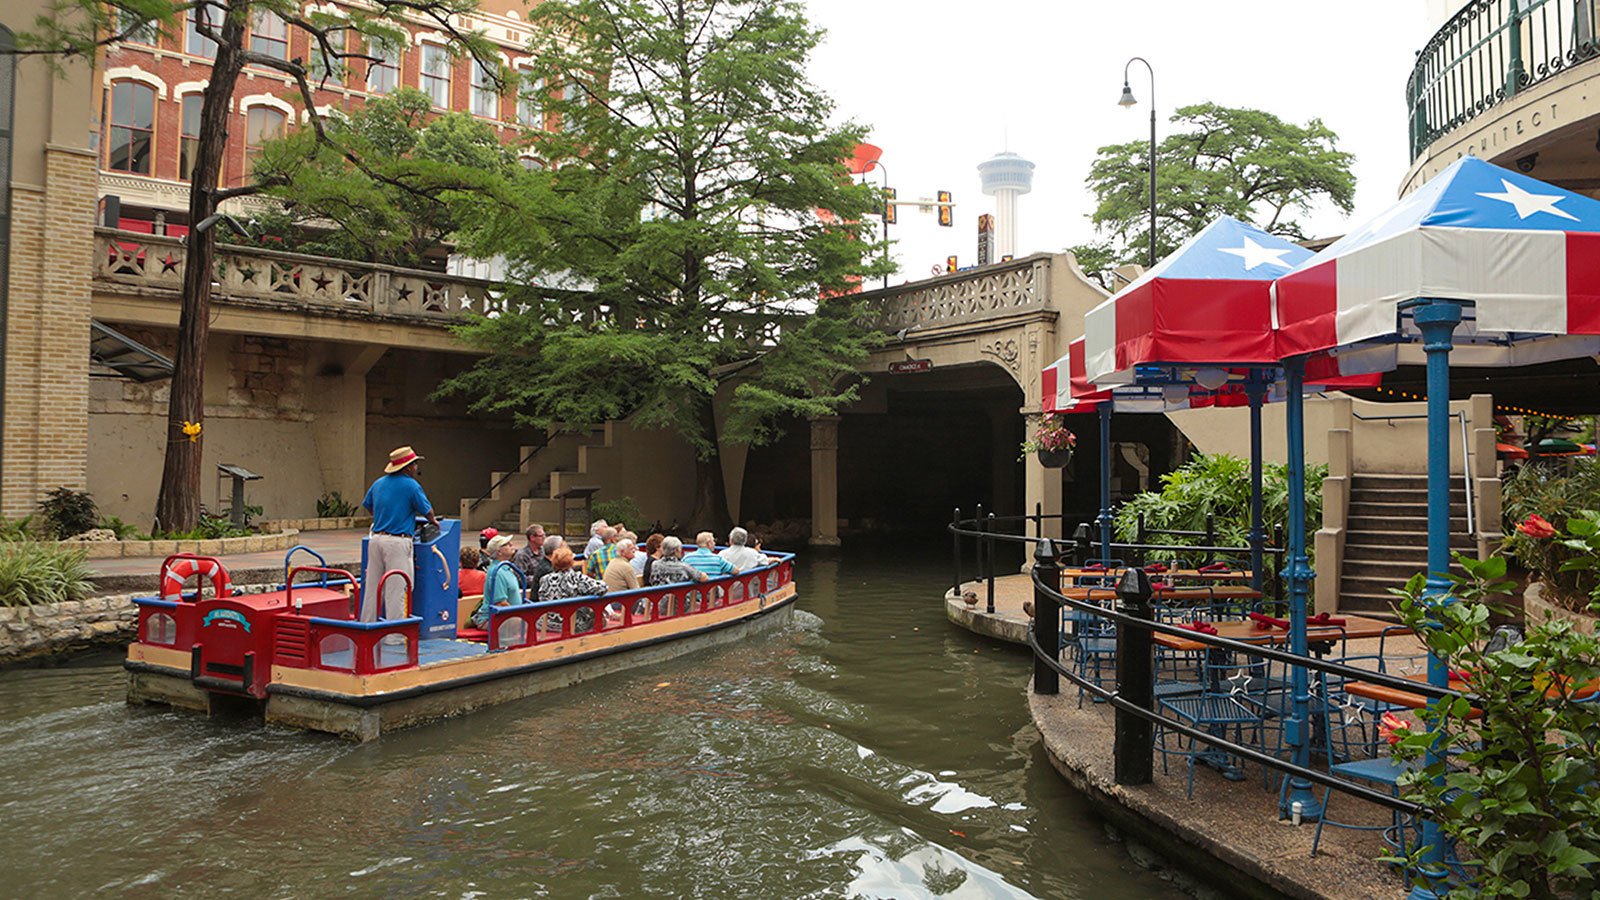 10 Best San Antonio River Walk Things to Do in 2023